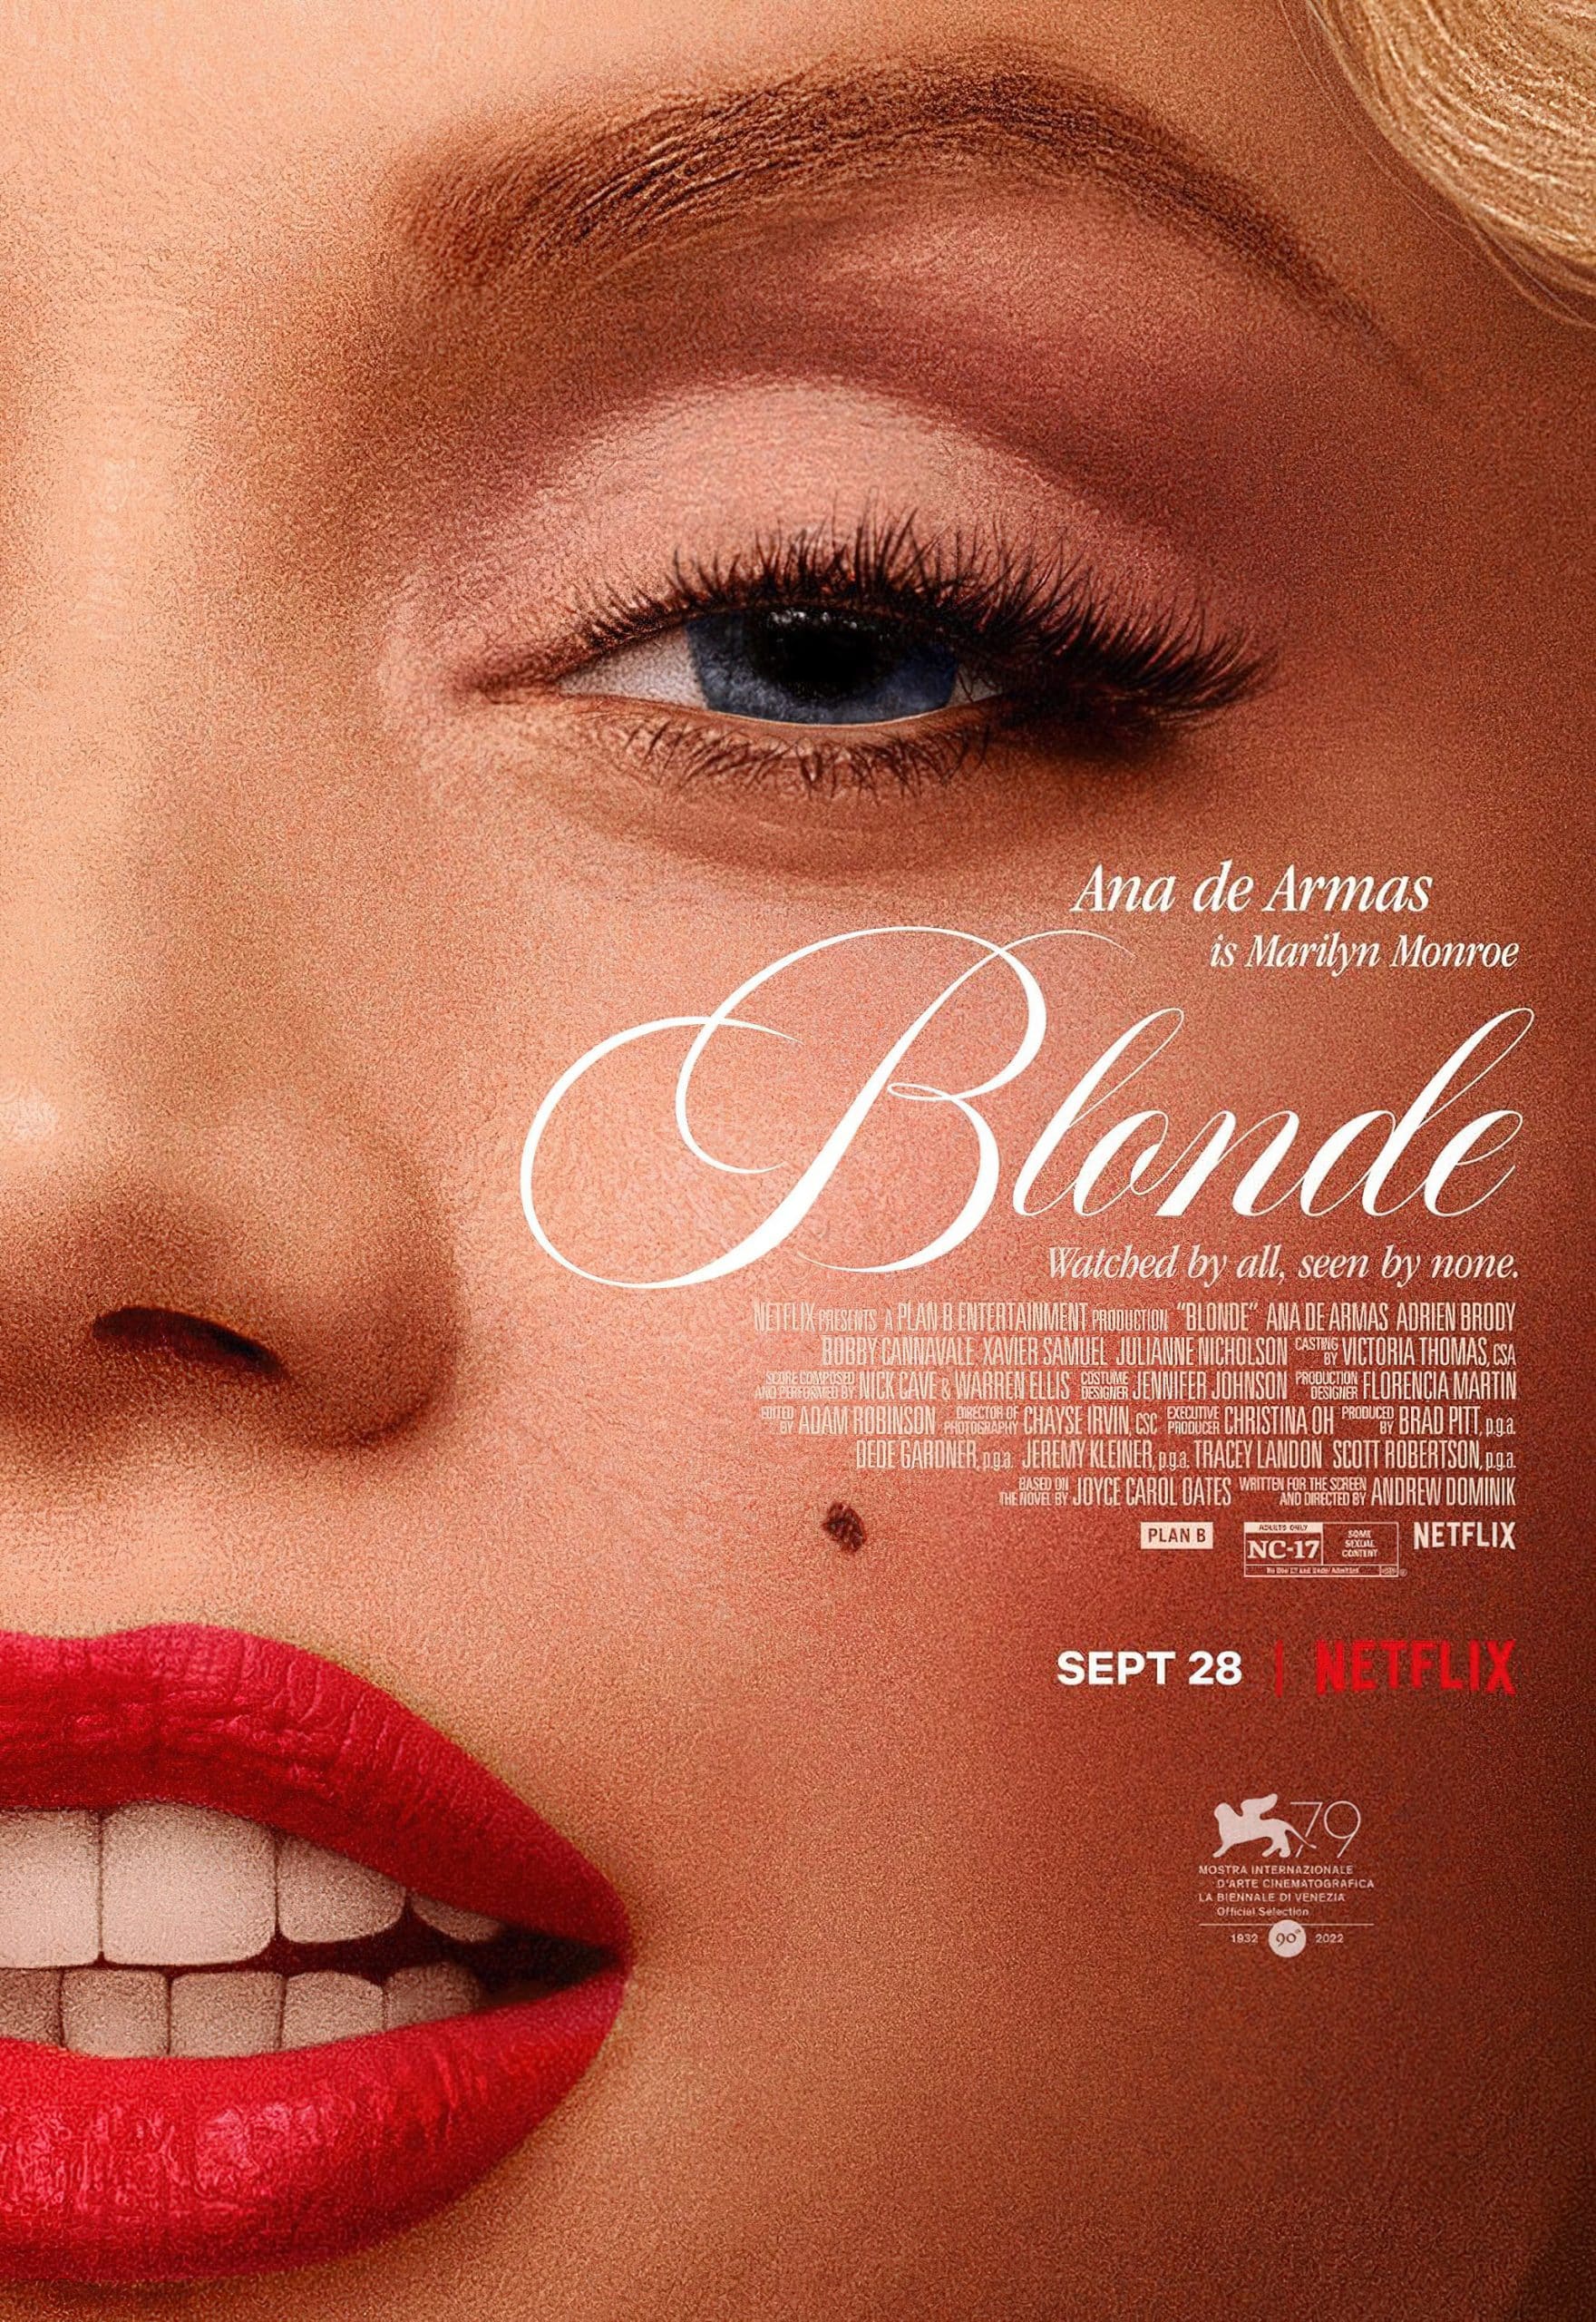 BLONDE, US poster, Ana de Armas as Marilyn Monroe, 2022